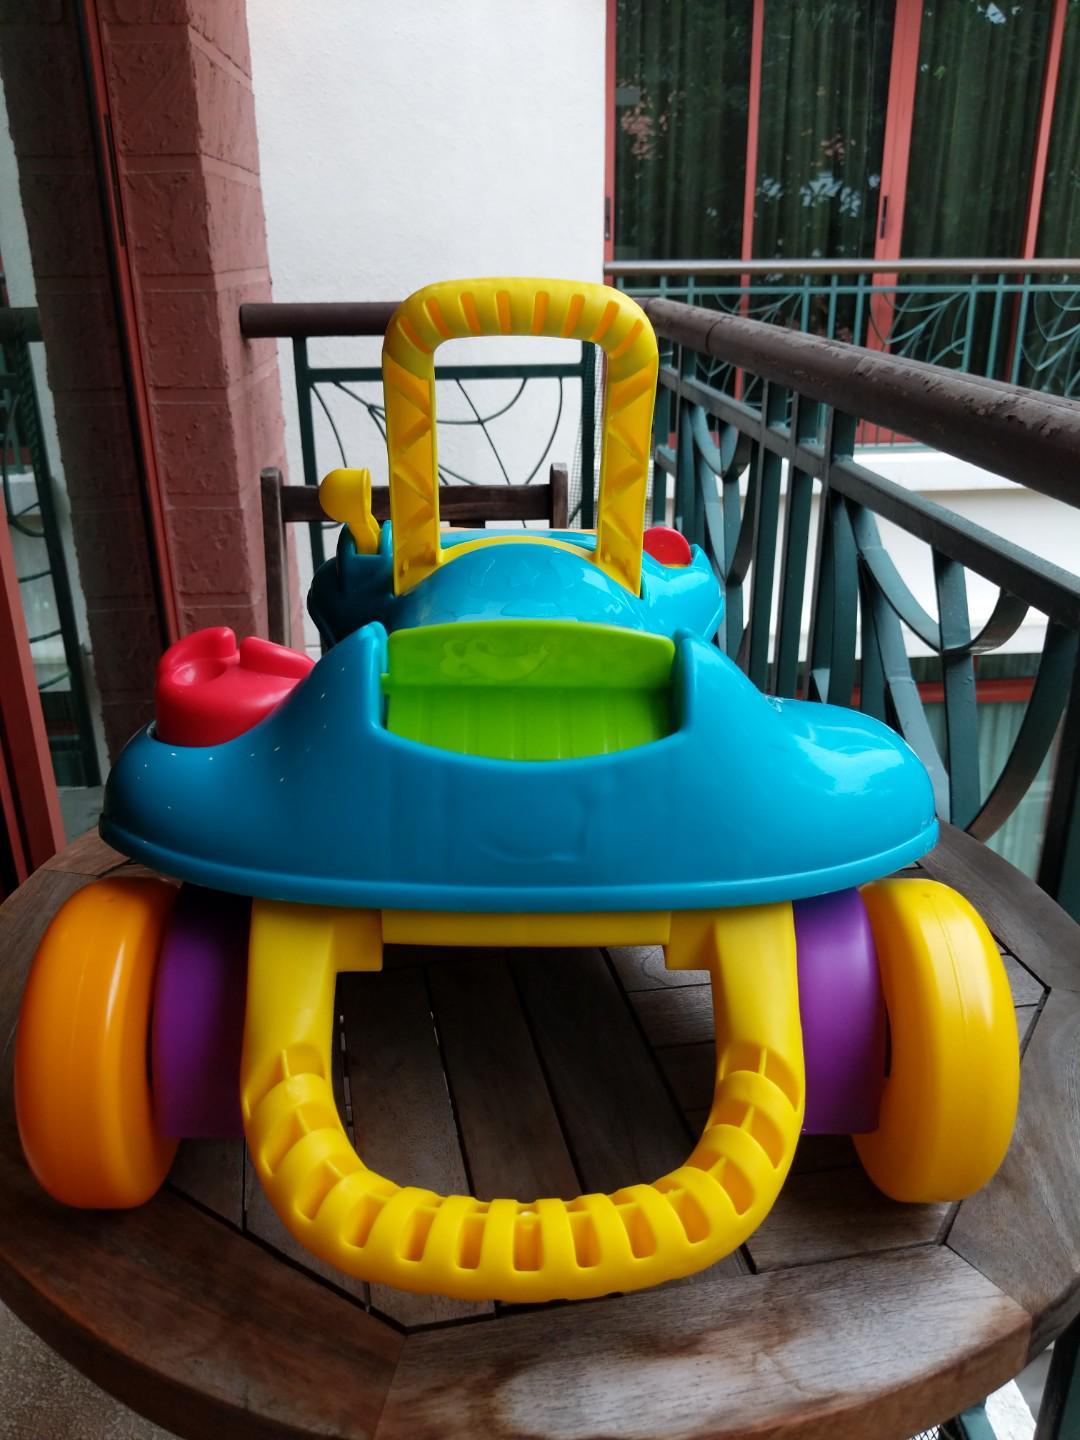 playskool outdoor play equipment